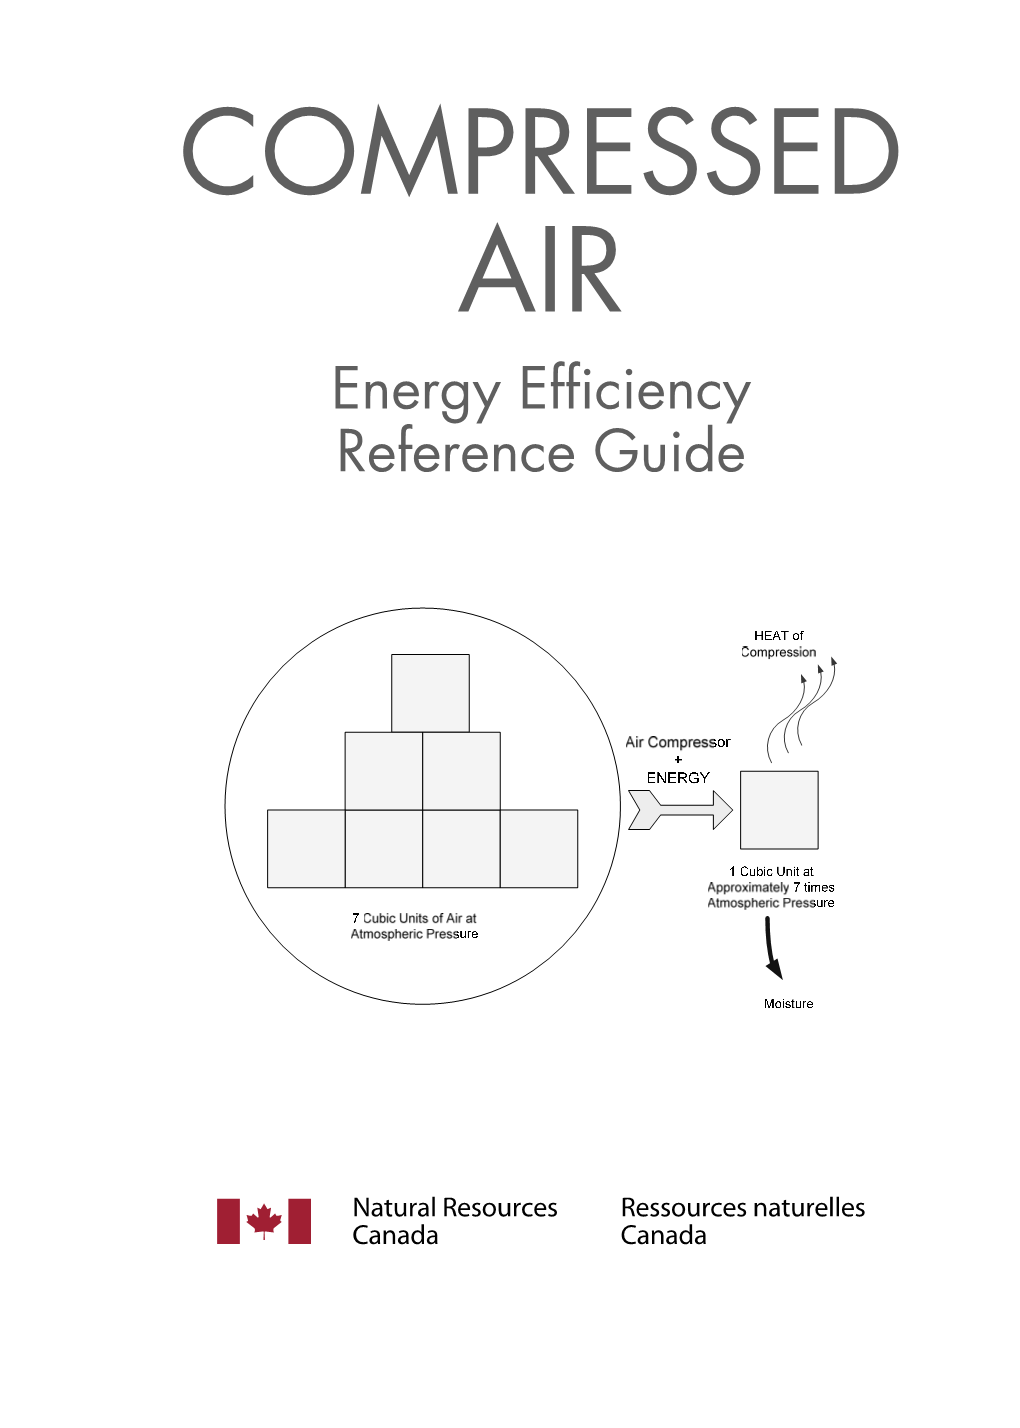 CEATI Compressed Air Handbook